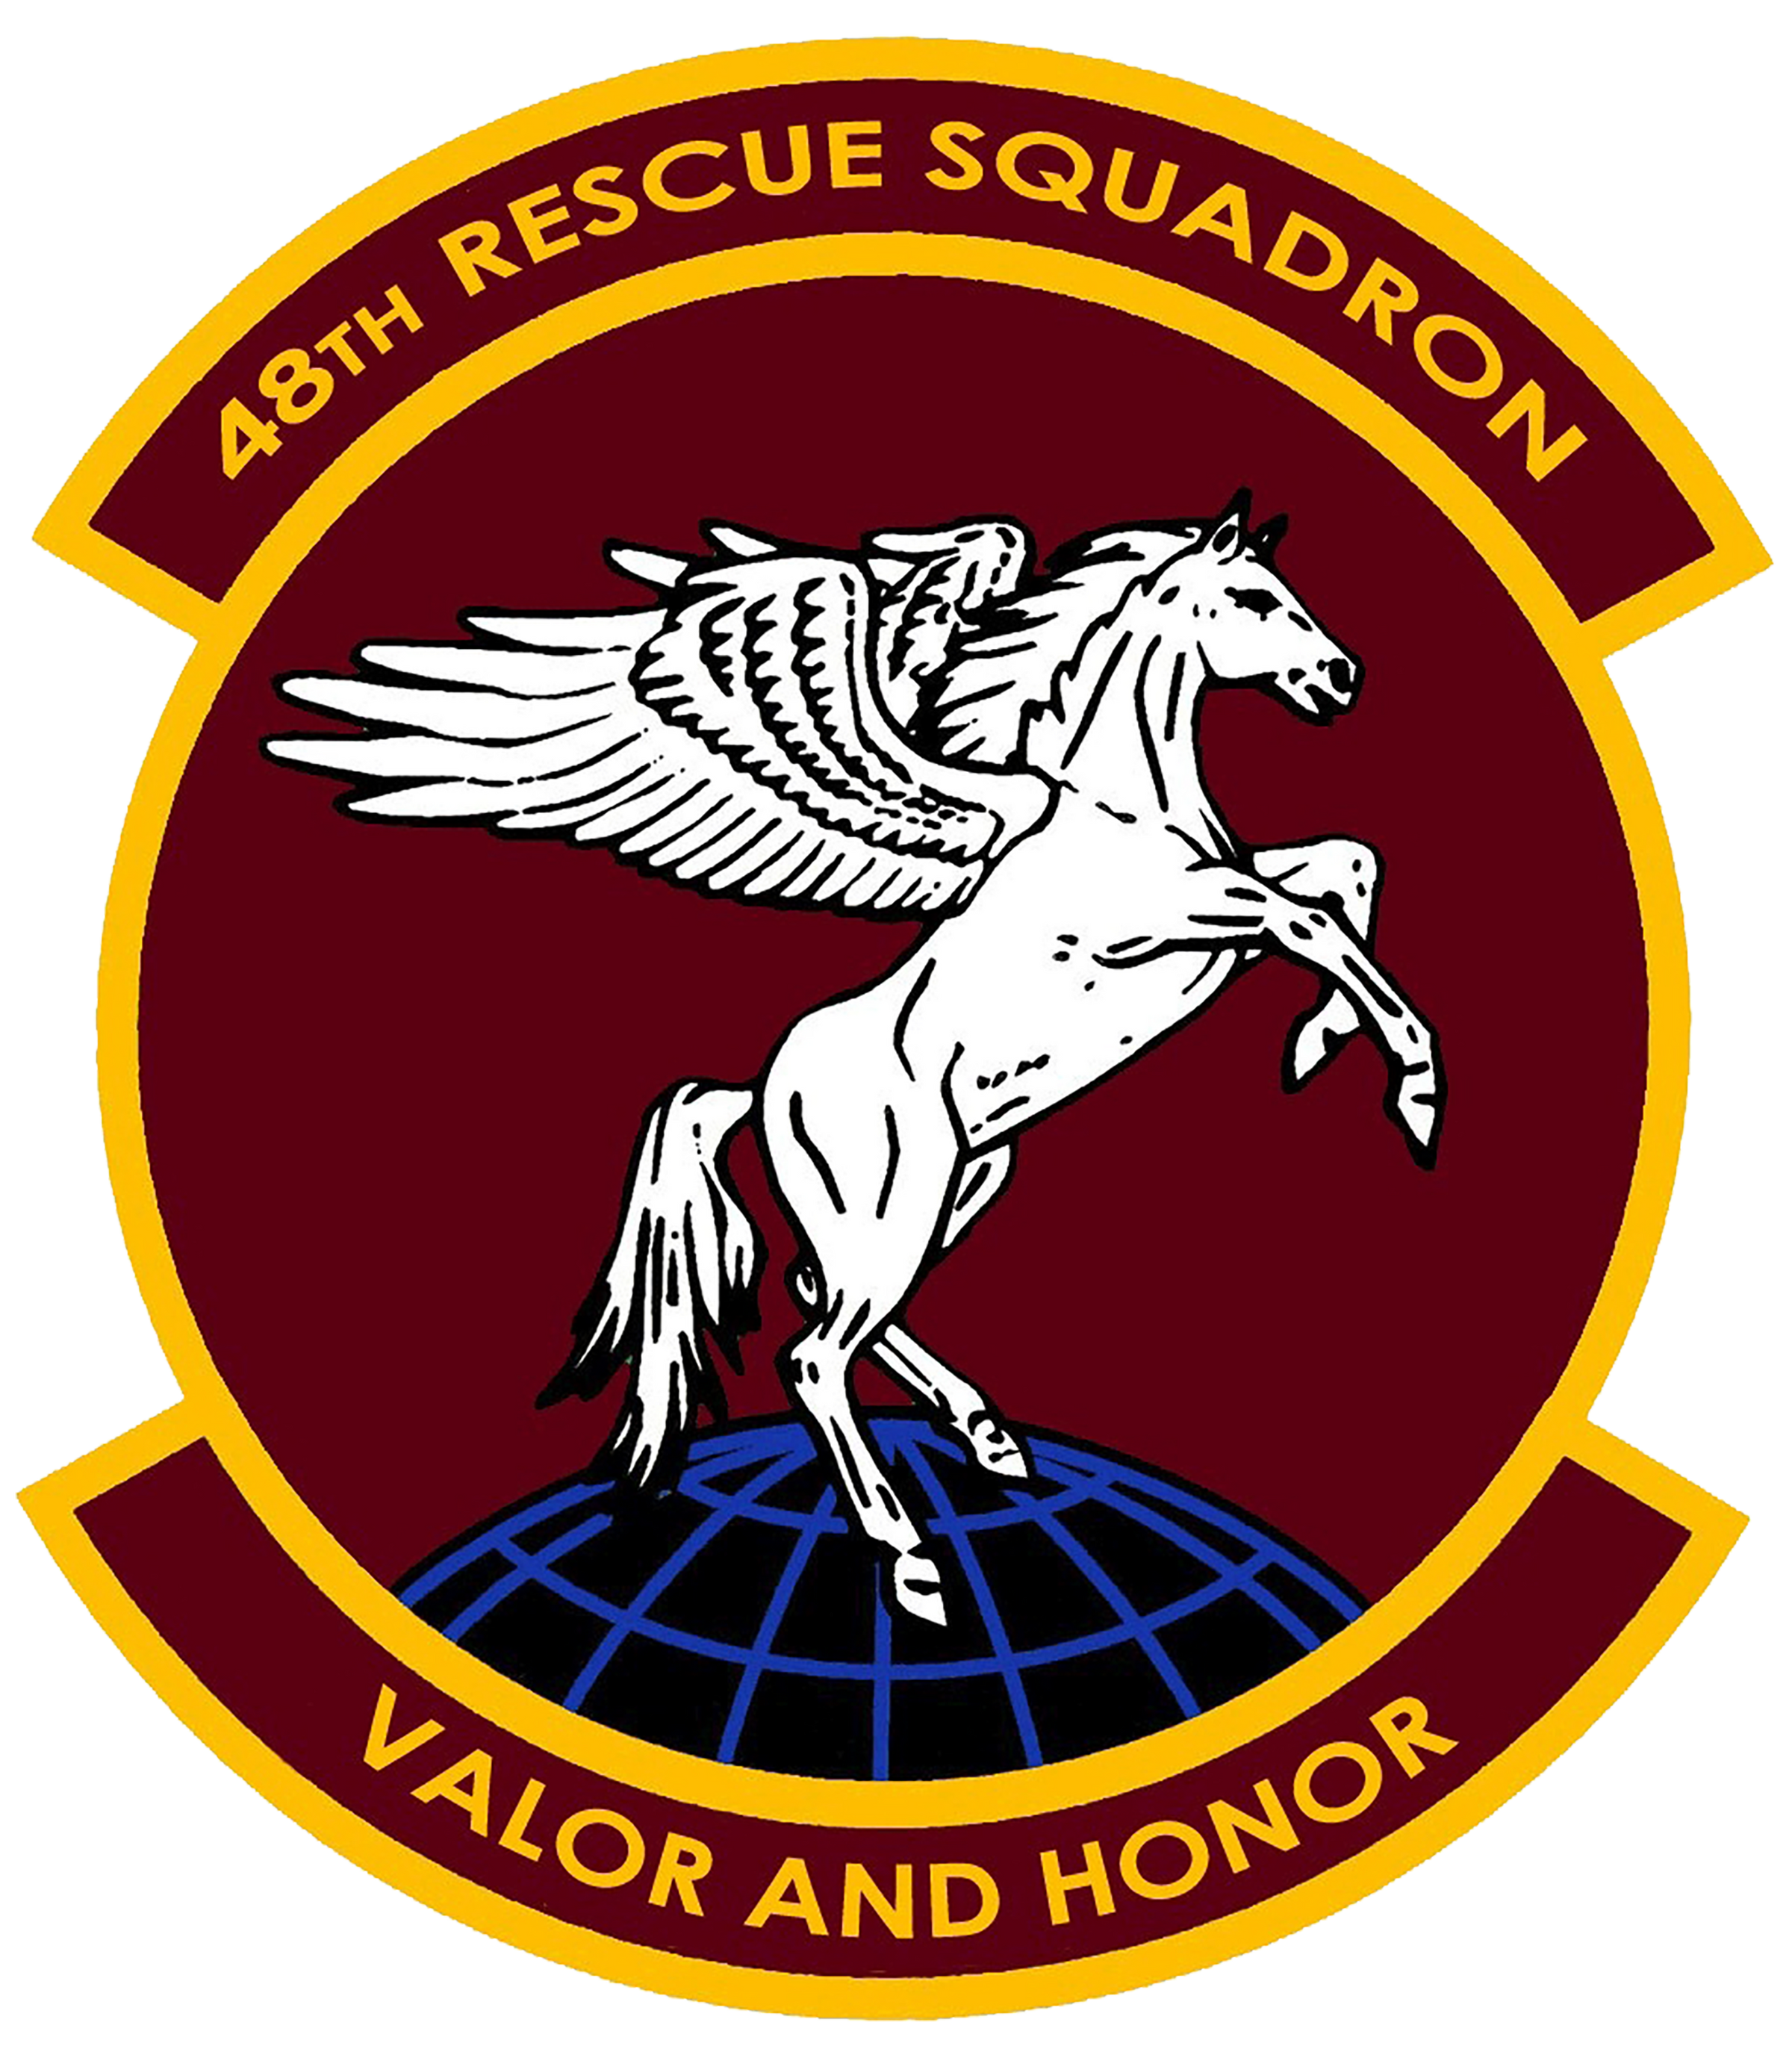 48th Rescue Squadron "Valor and Honor"